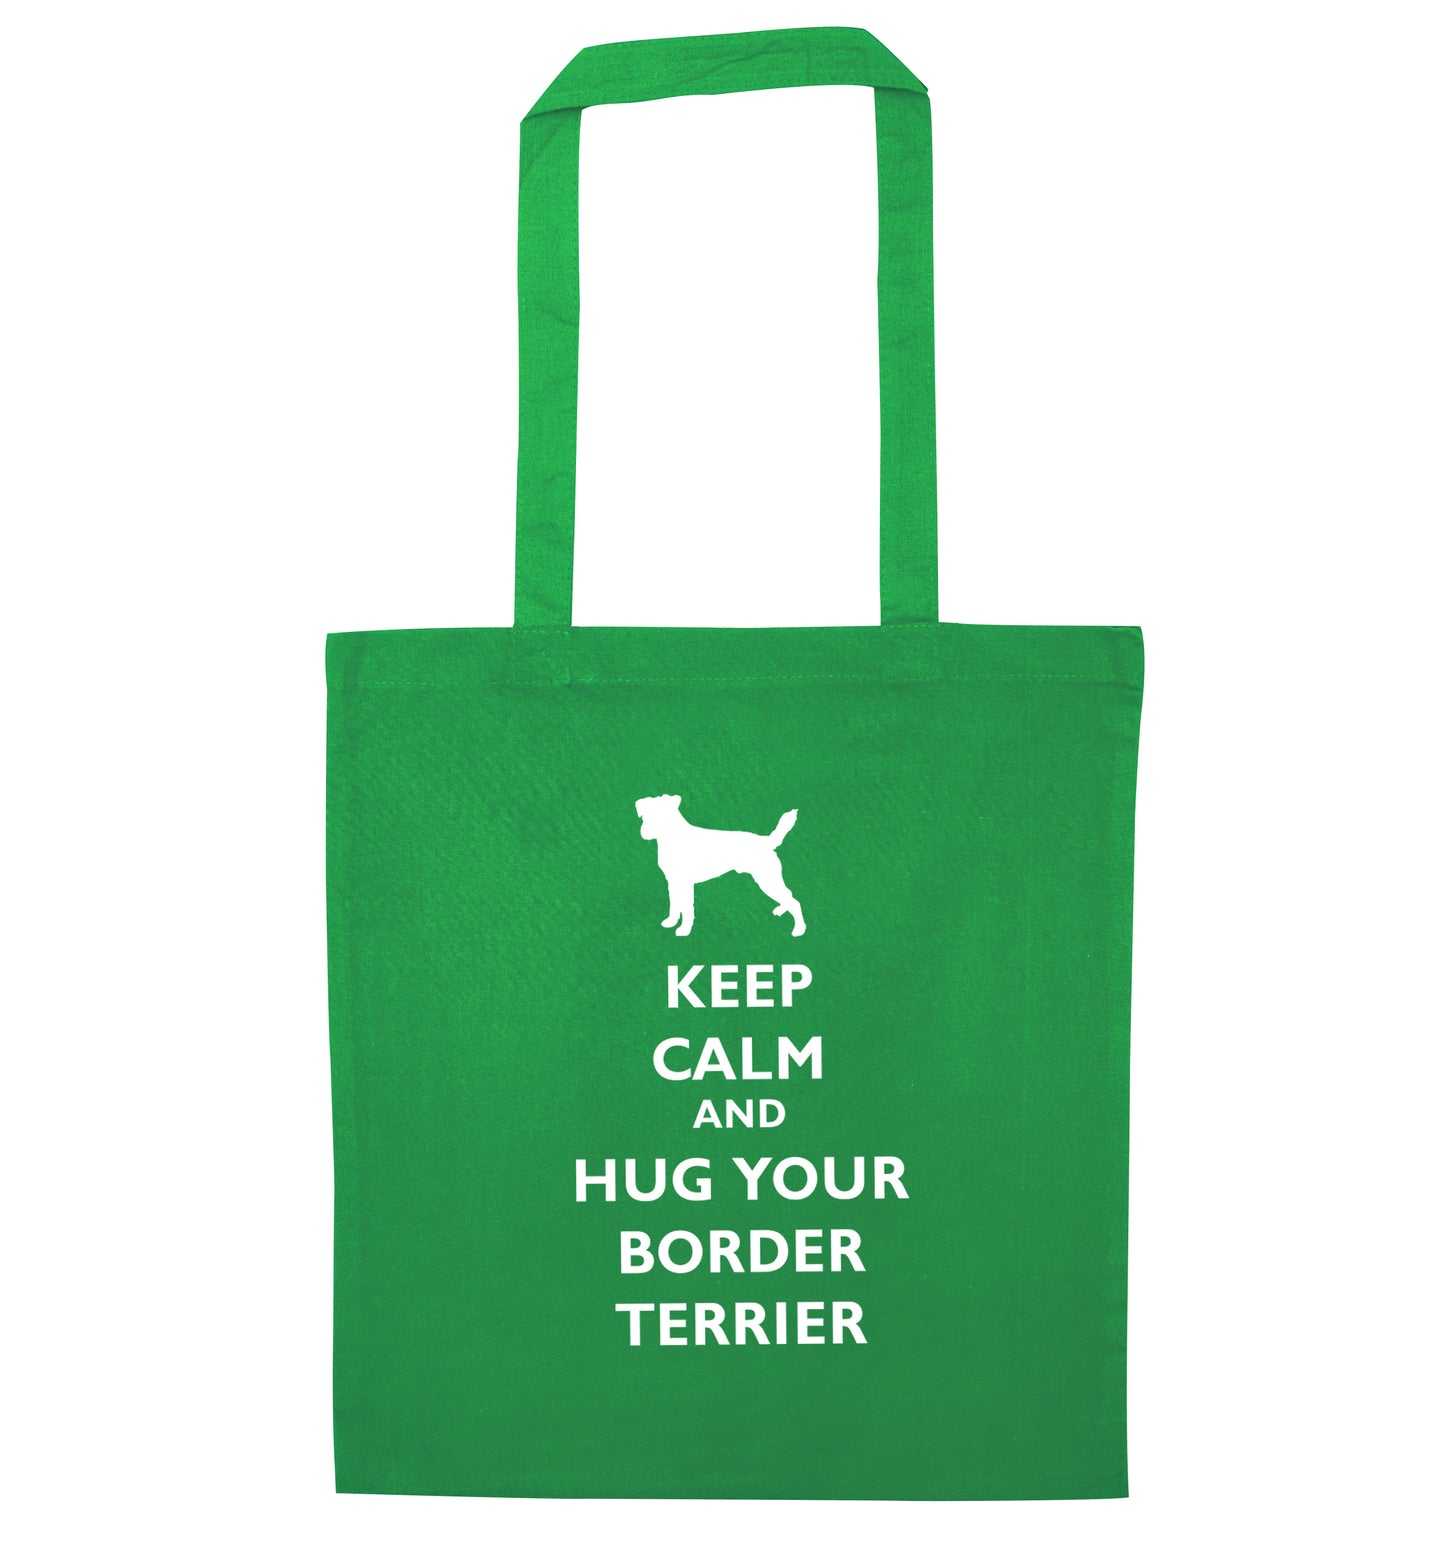 Keep calm and hug your border terrier green tote bag